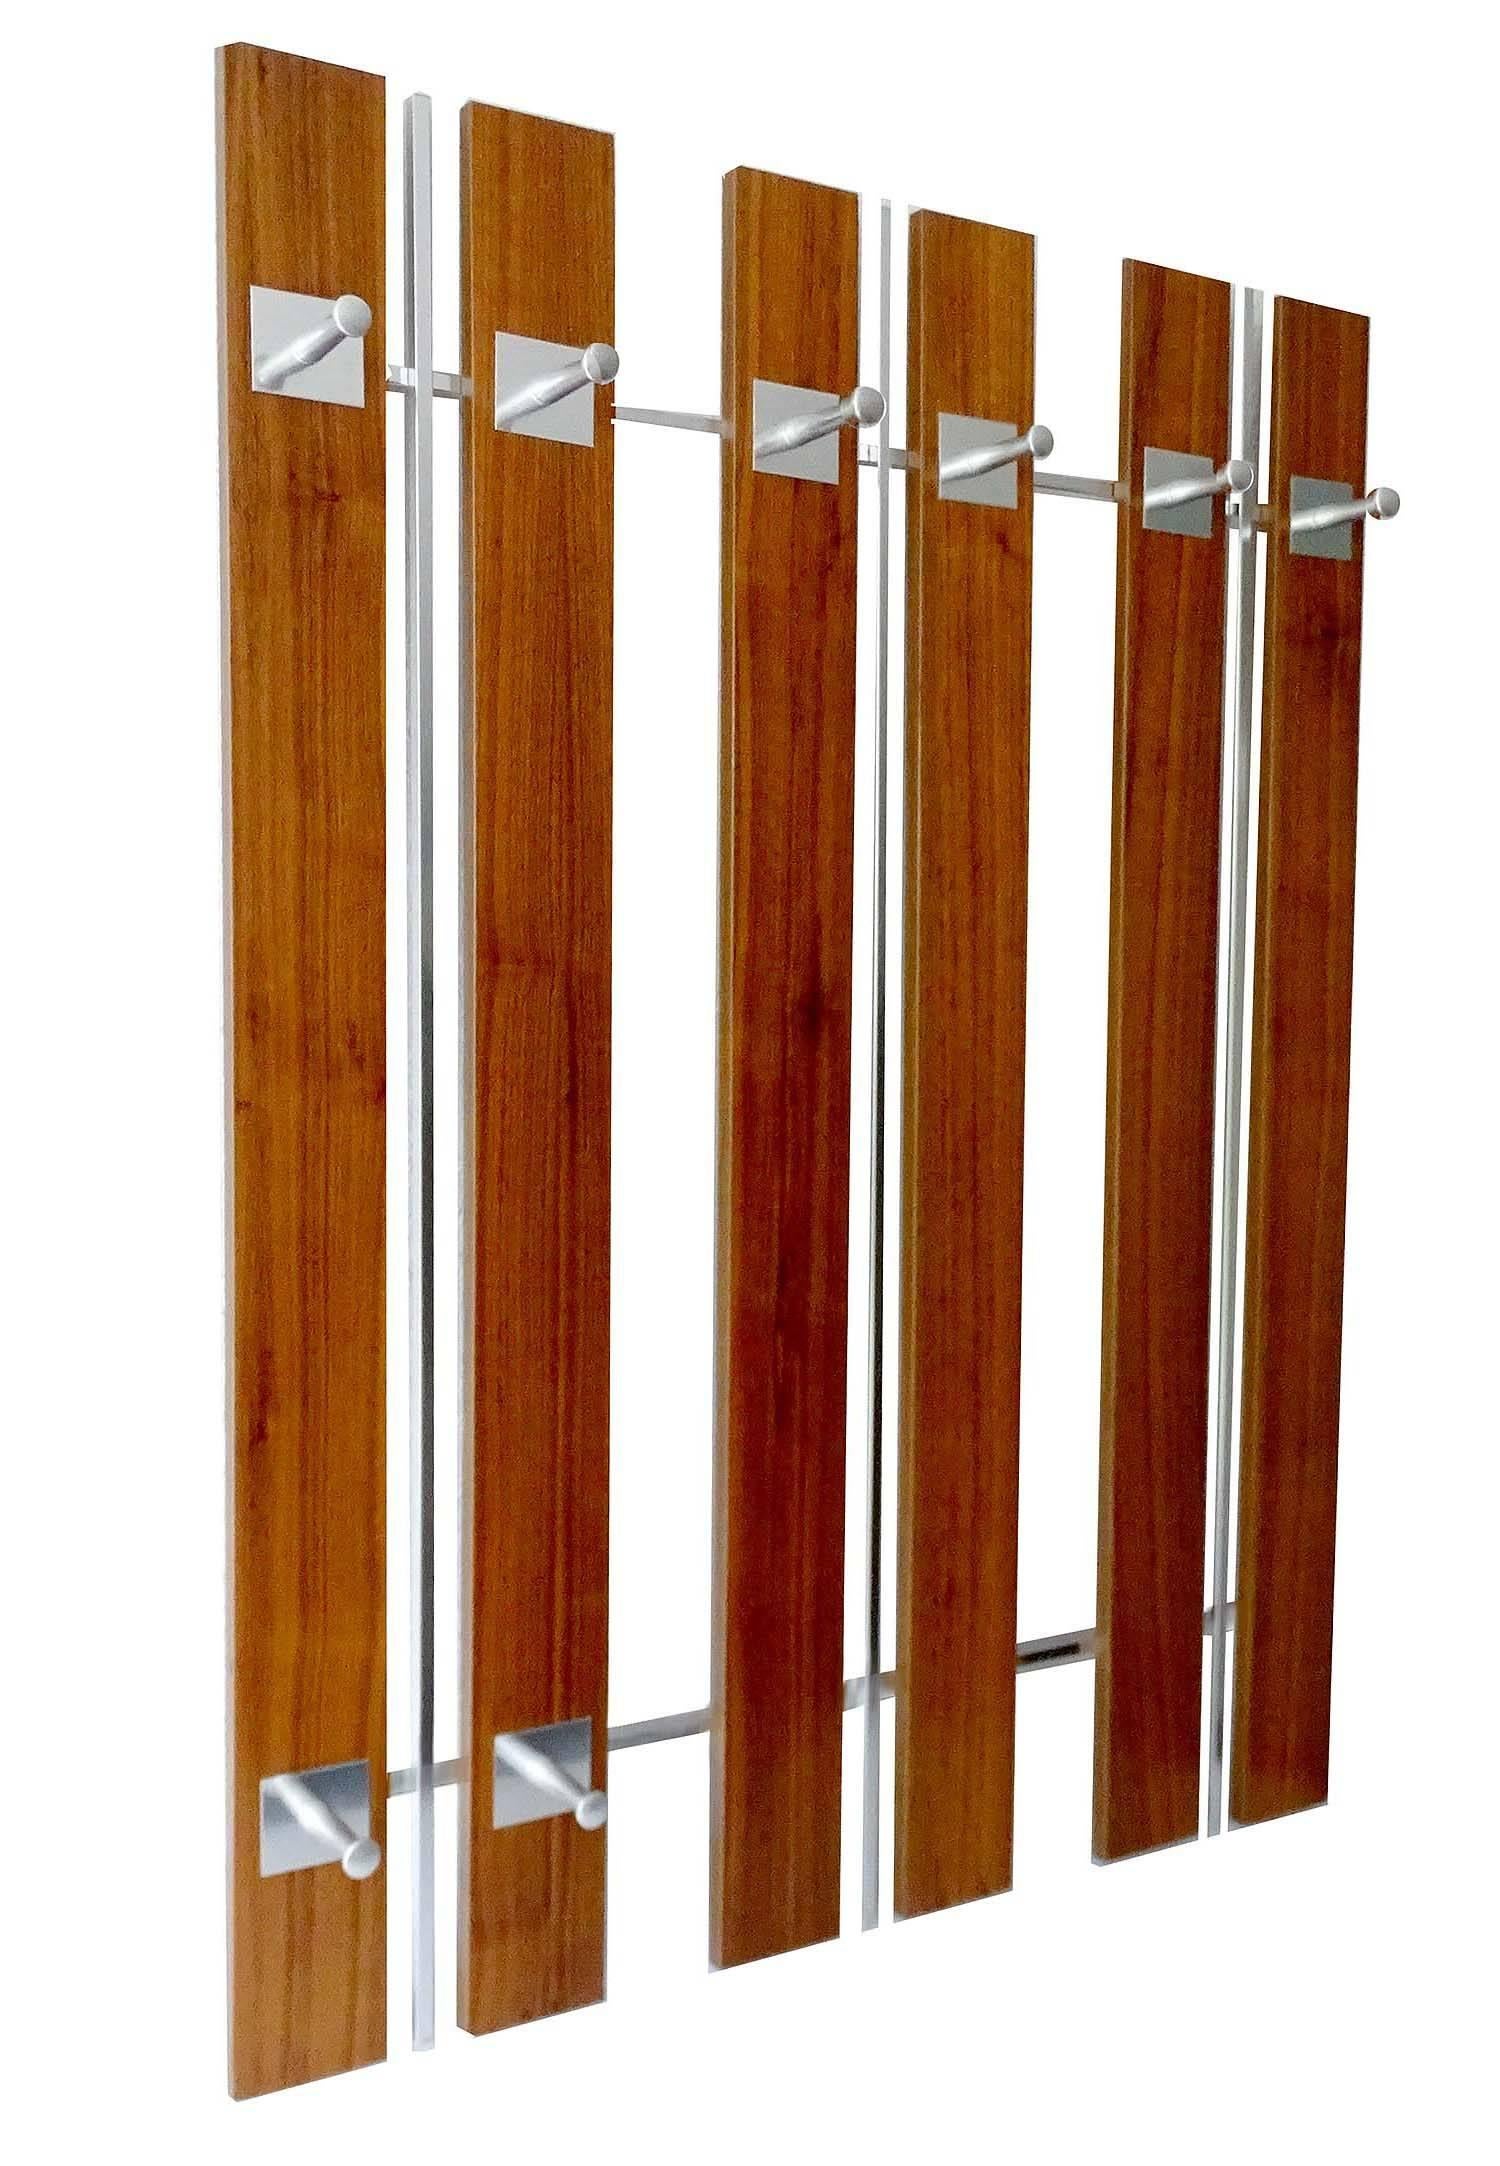 Scandinavian Modern Mid Century Danish Rosewood Wall Coat Rack, 1960s Modernist Design For Sale